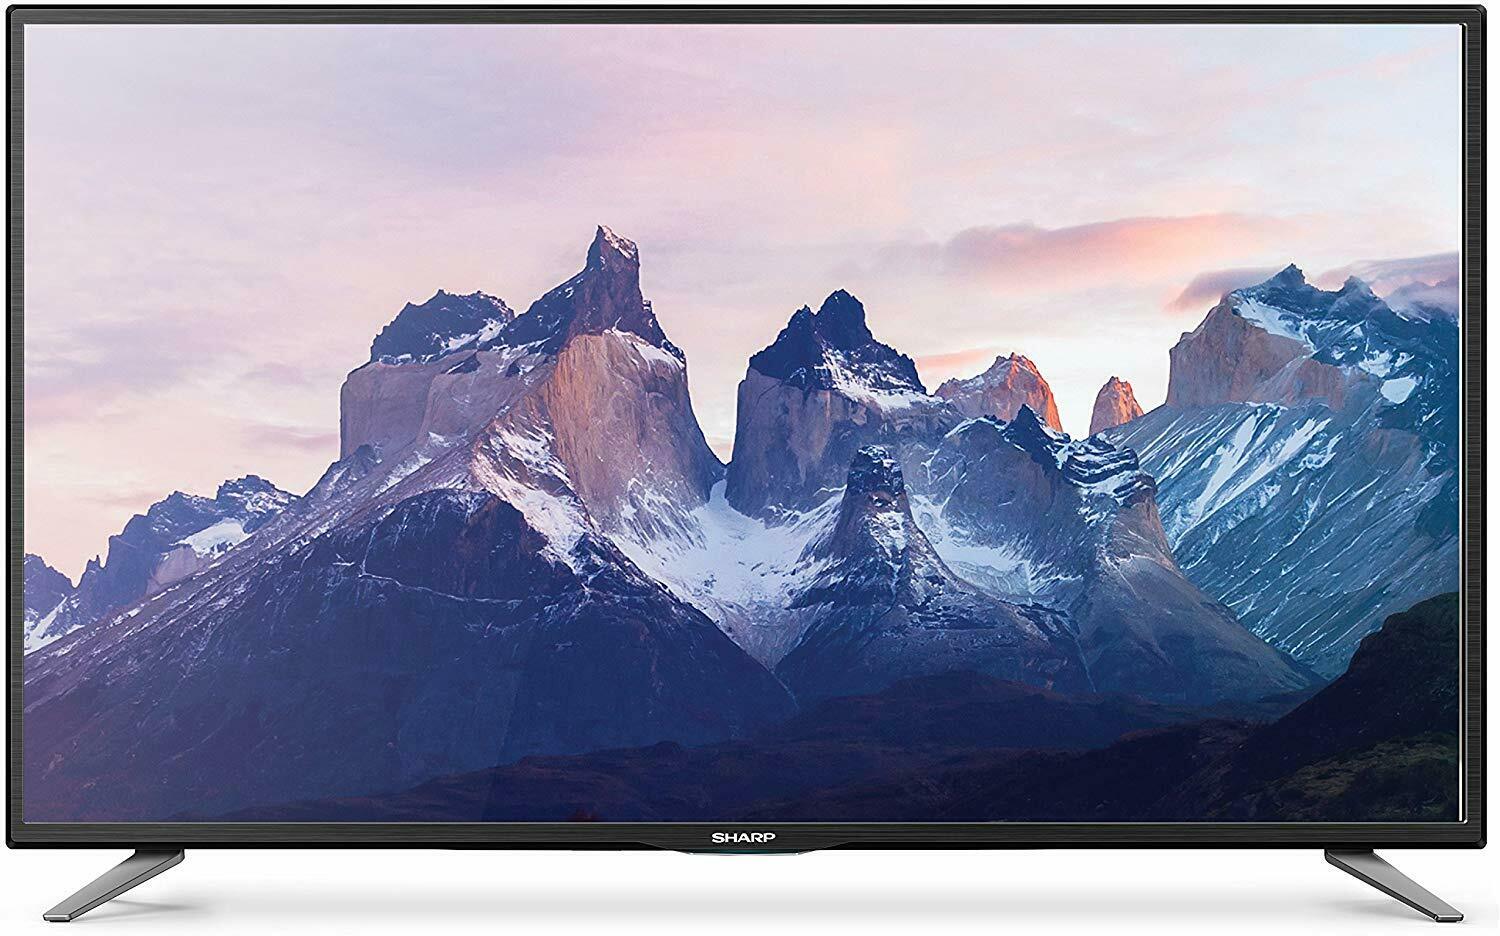 Gambar TV LED Full HD 50 Inci Sharp LC-50CFE5101K